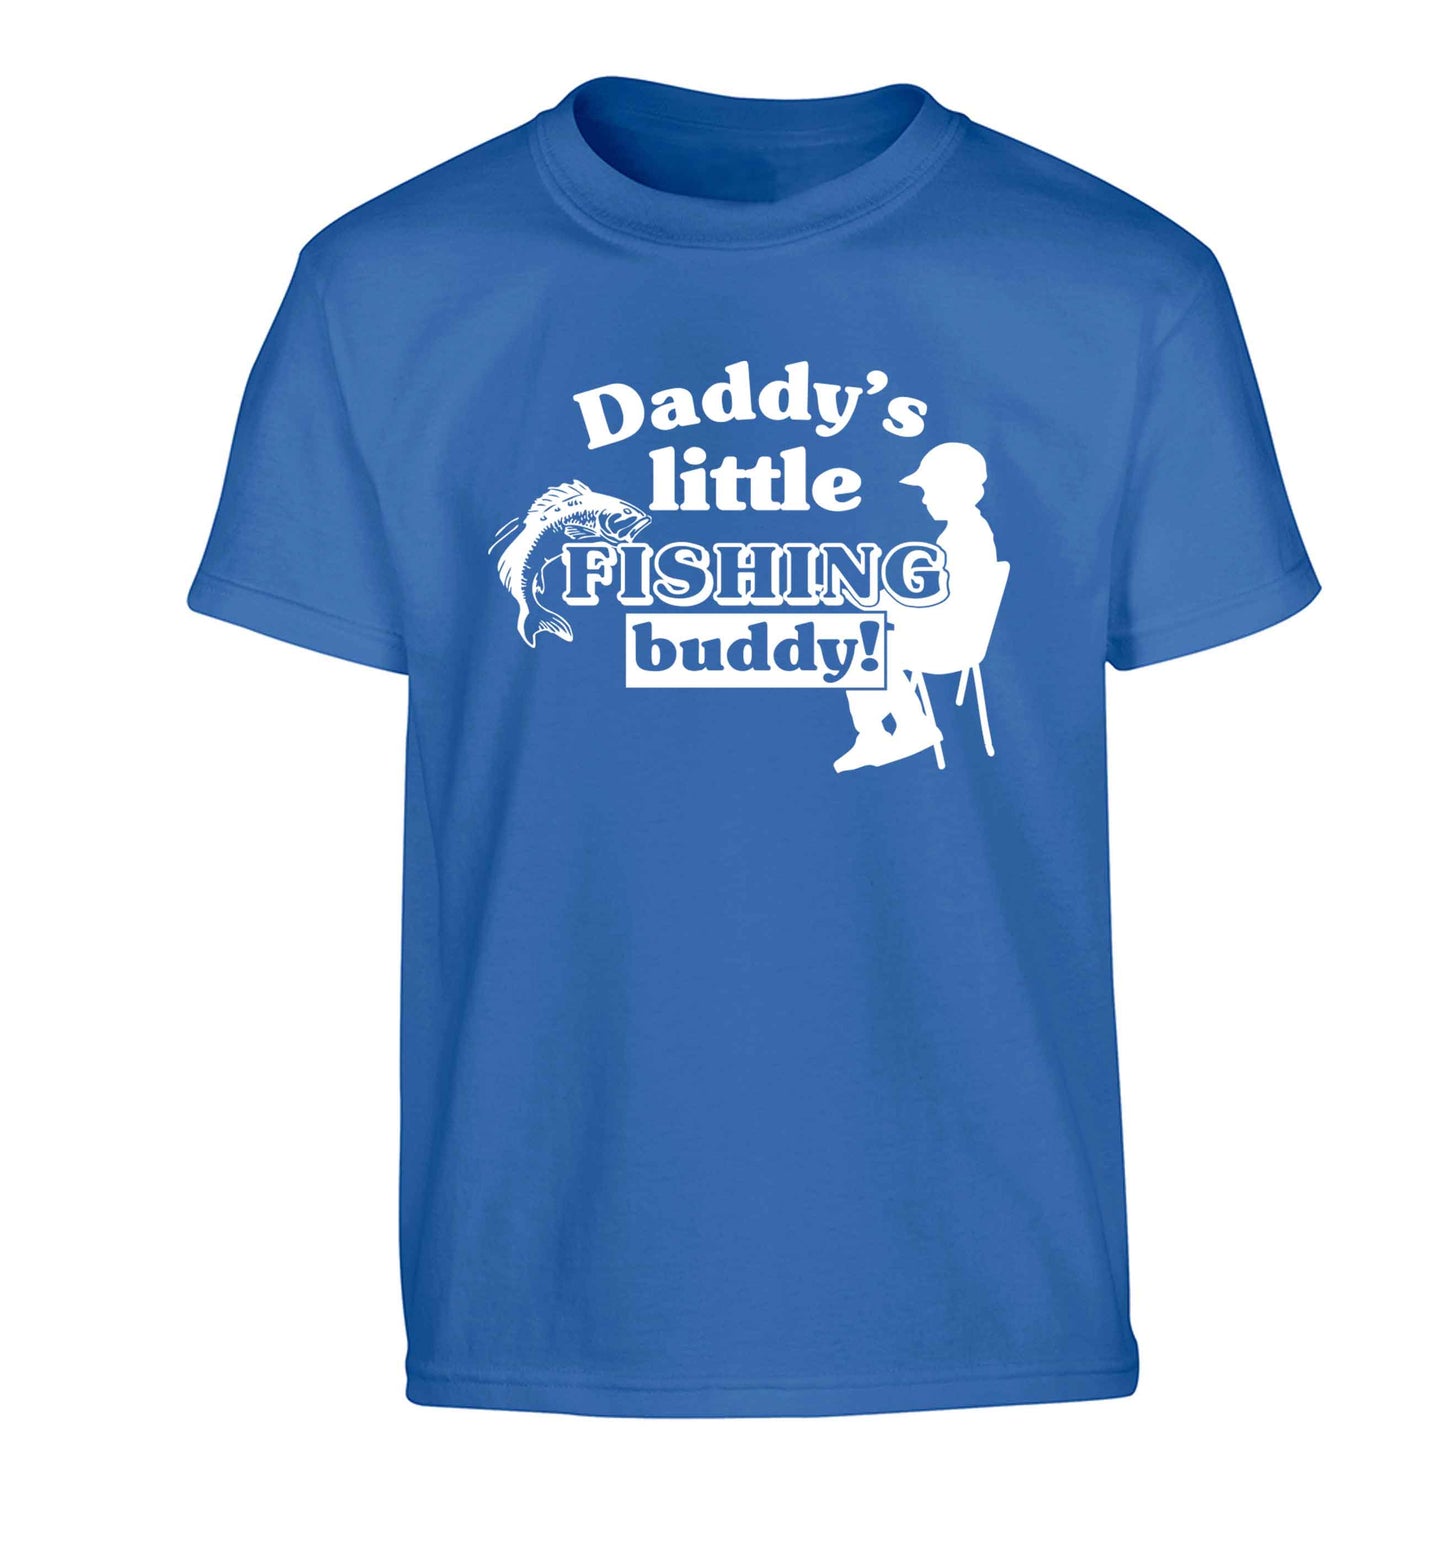 Daddy's little fishing buddy Children's blue Tshirt 12-13 Years